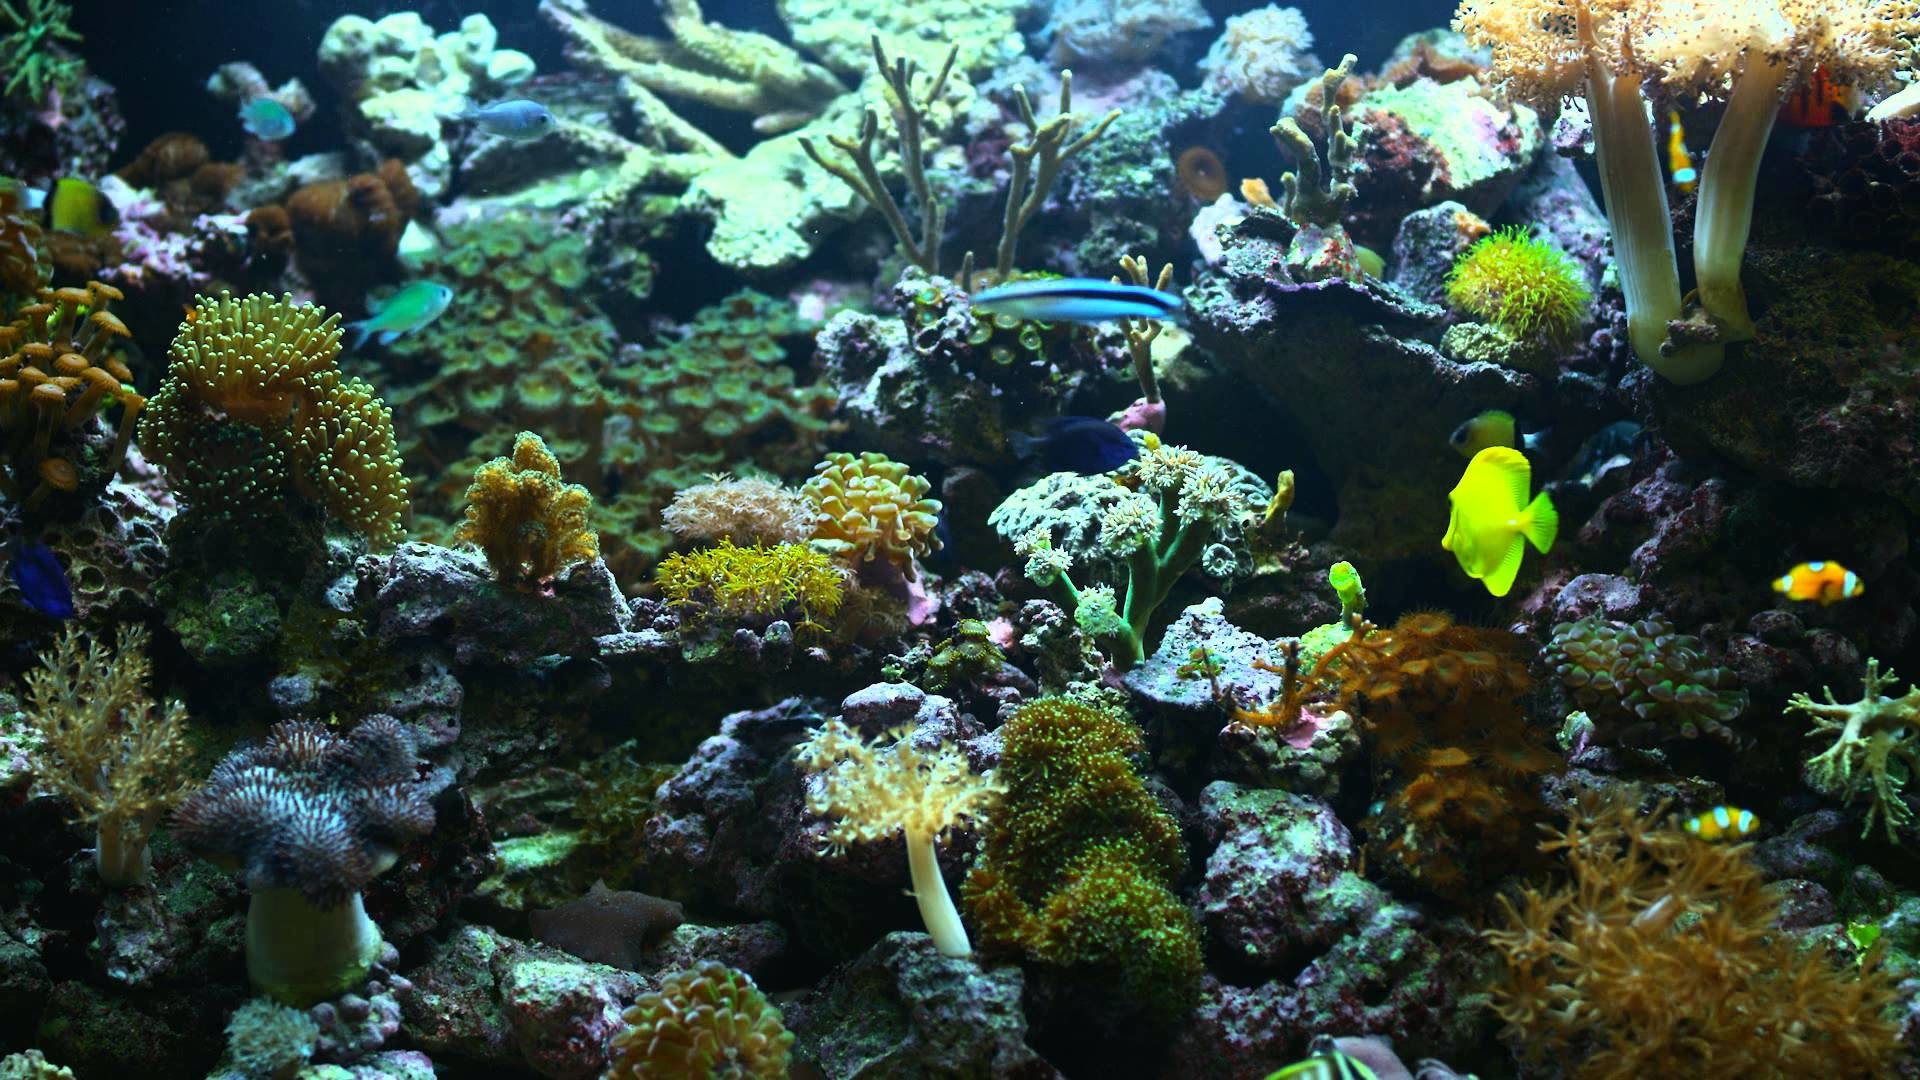 1920x1080 Full Size of Fish Tank Aquarium 4kull Hd Trailer The Tropical Reef  Experience Wideish Tanksor Salewide ...